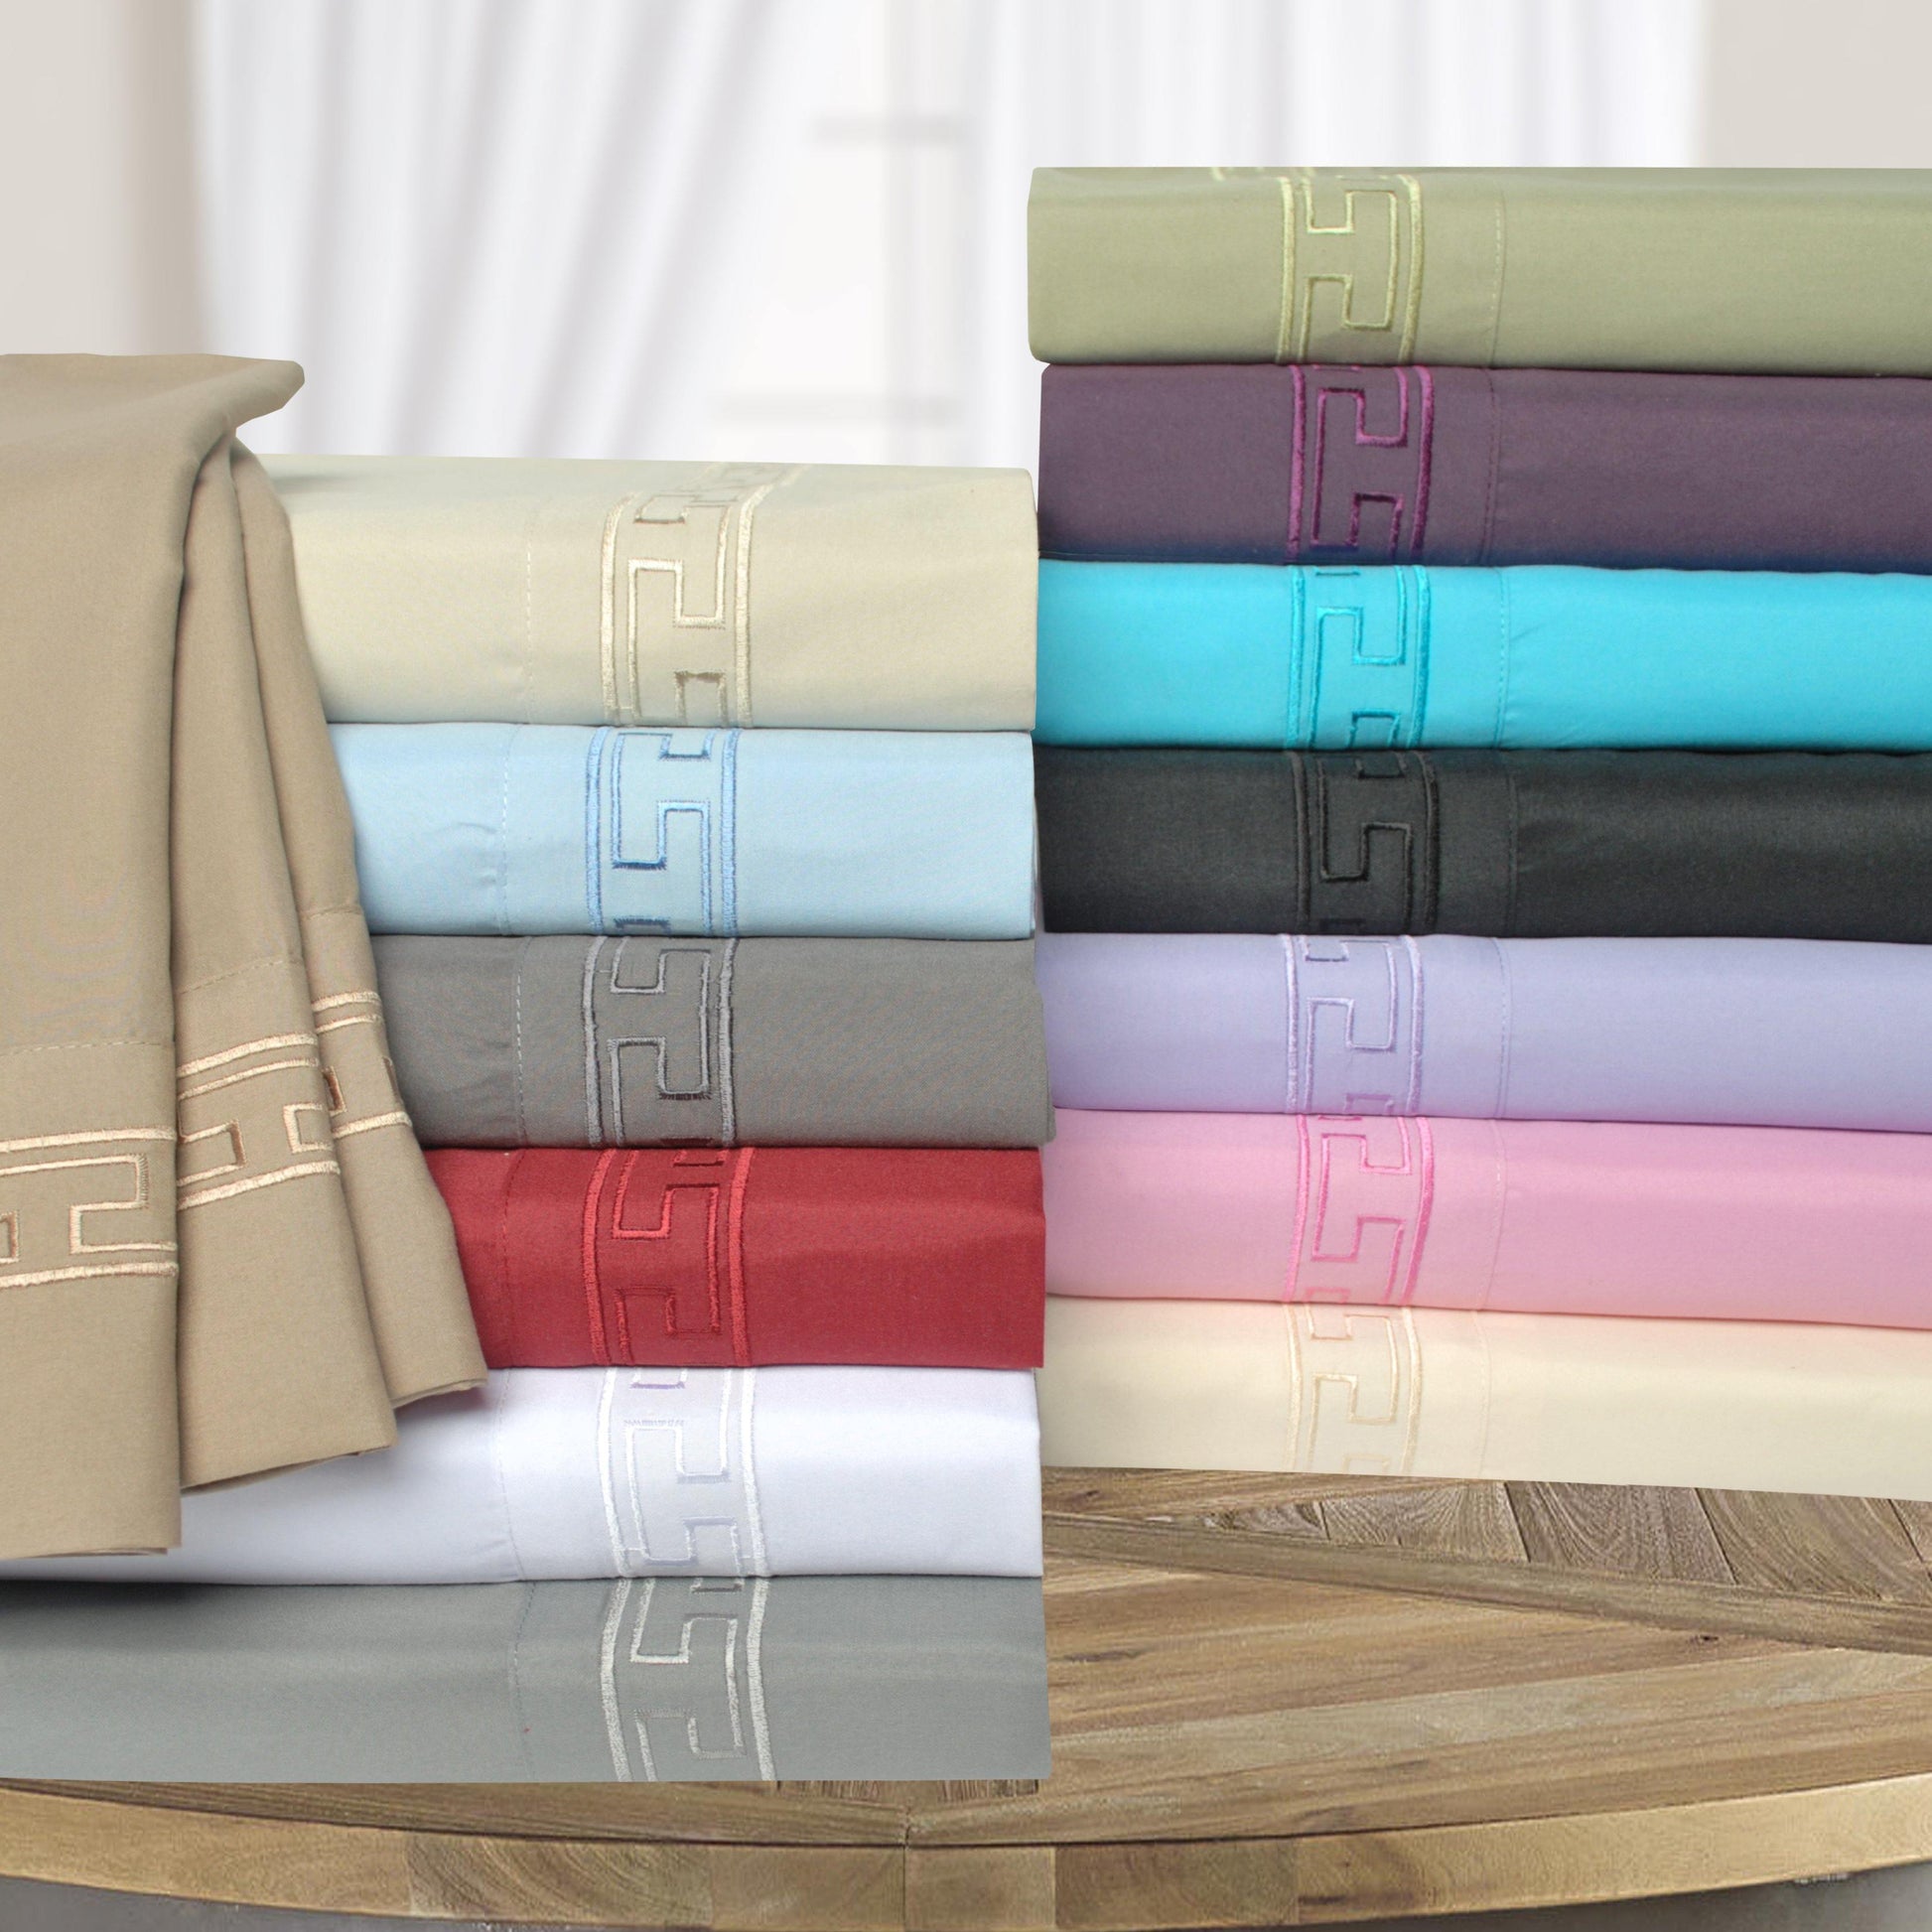 3000 Series Wrinkle Resistant Elegant Lace Sheet Set FredCo